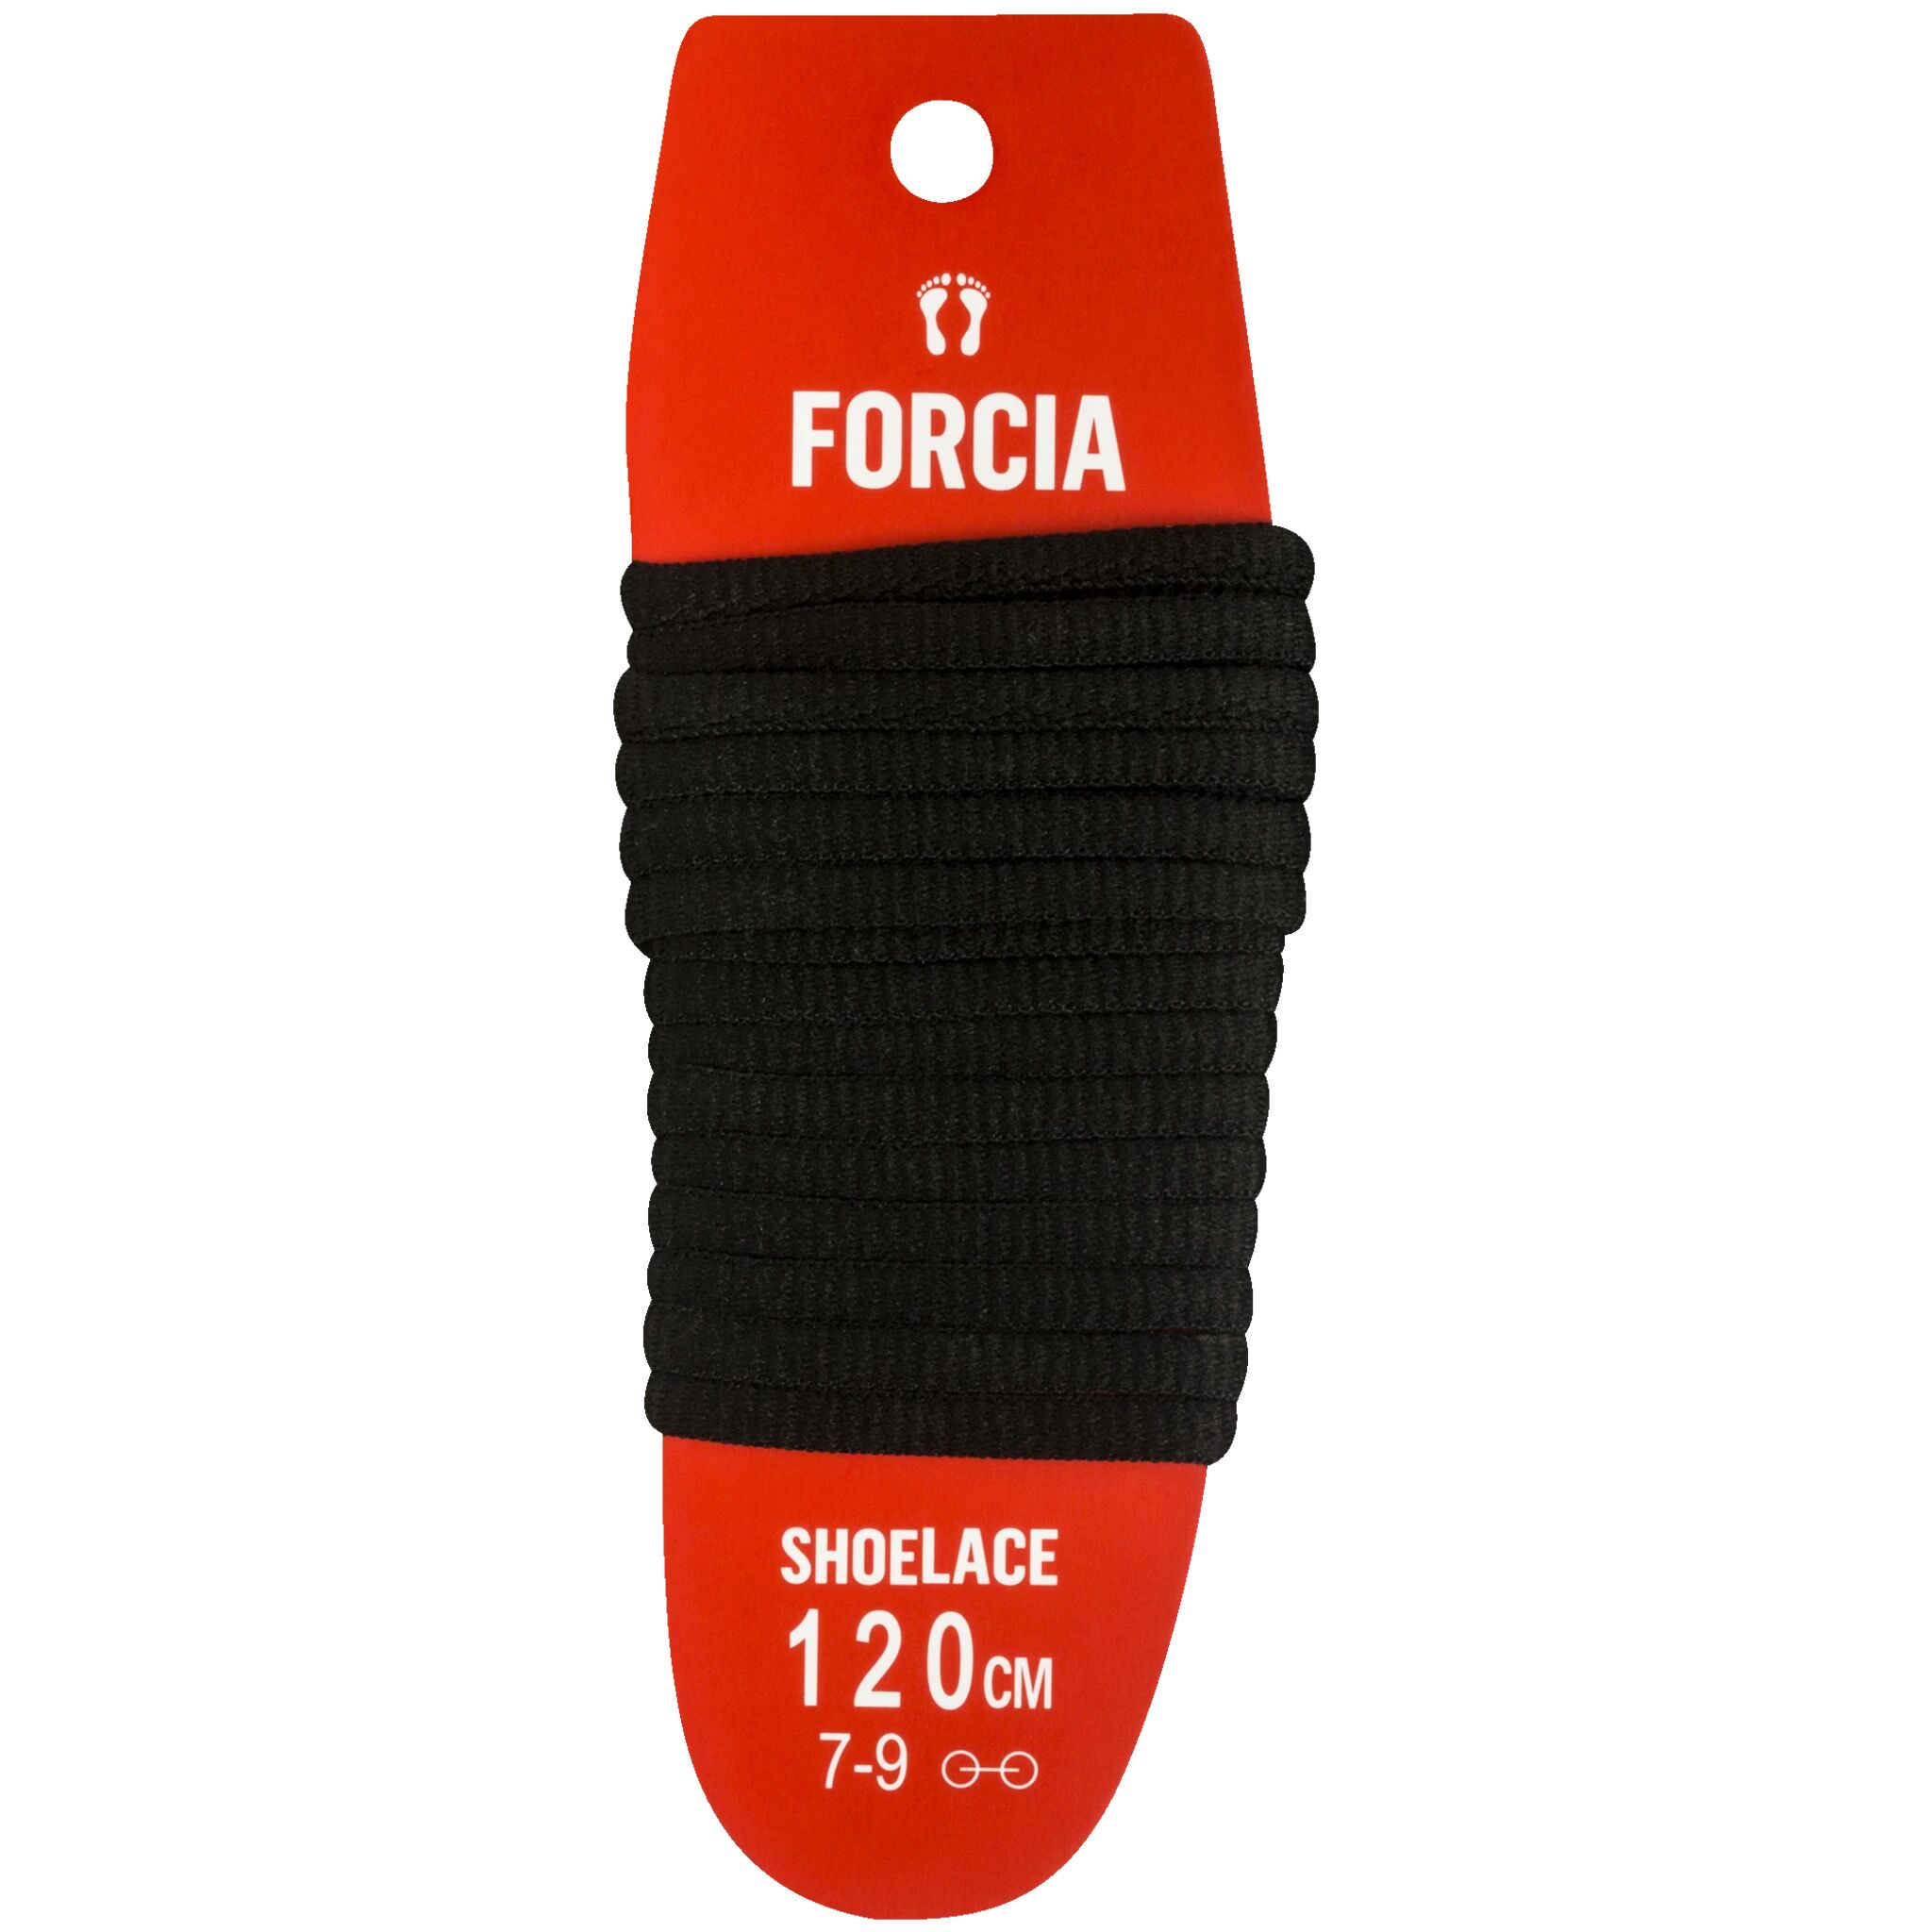 Forcia ShoeLace 120cm, skolisser 120cm Black